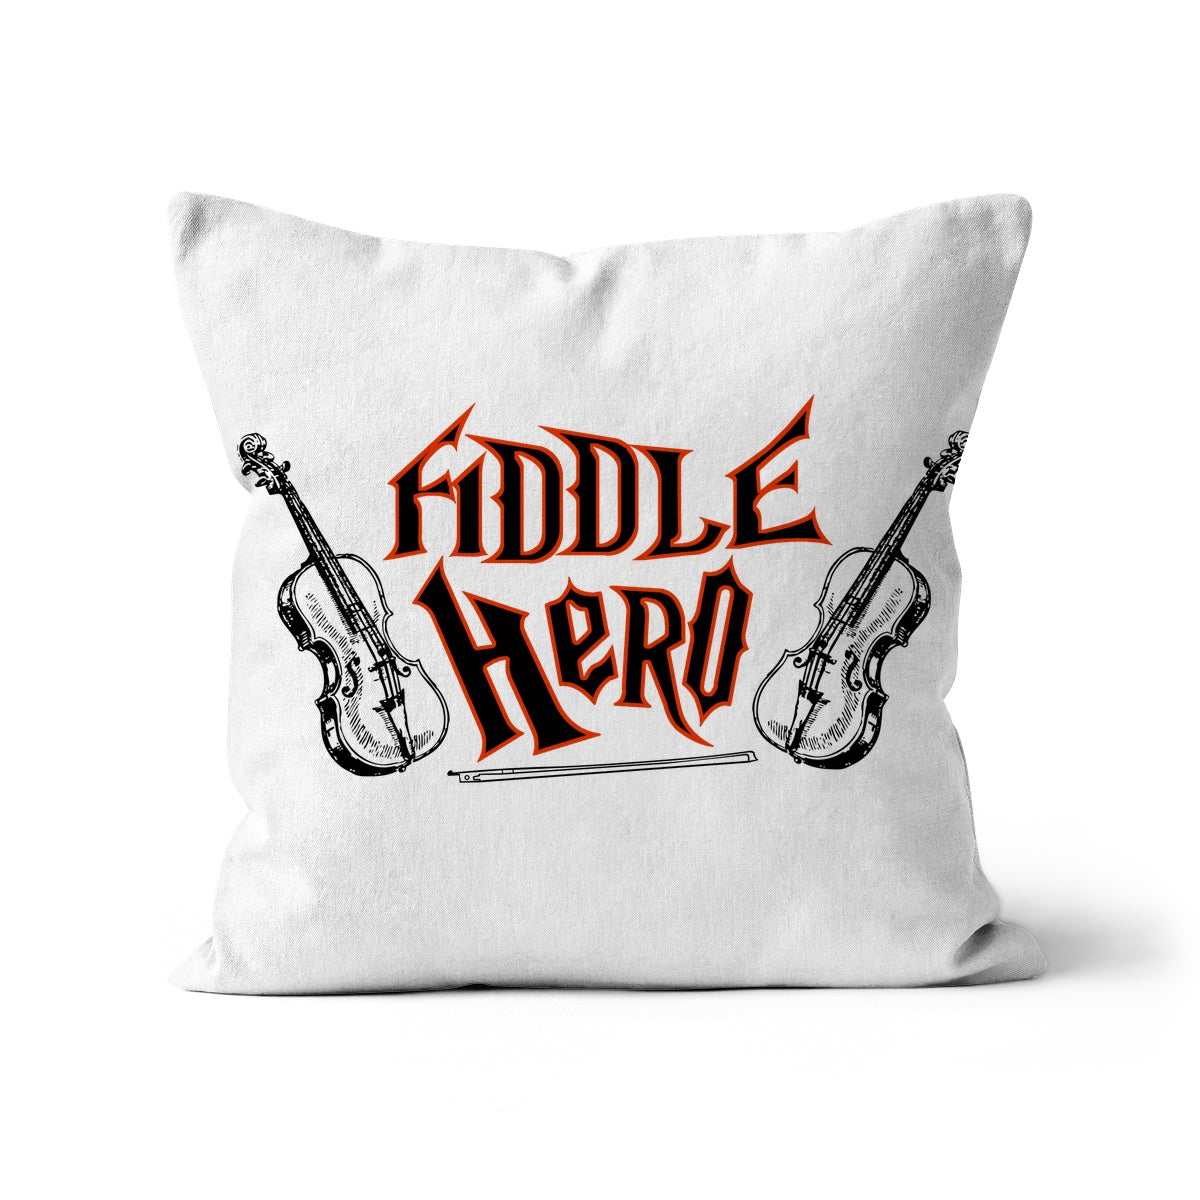 Fiddle Hero Cushion